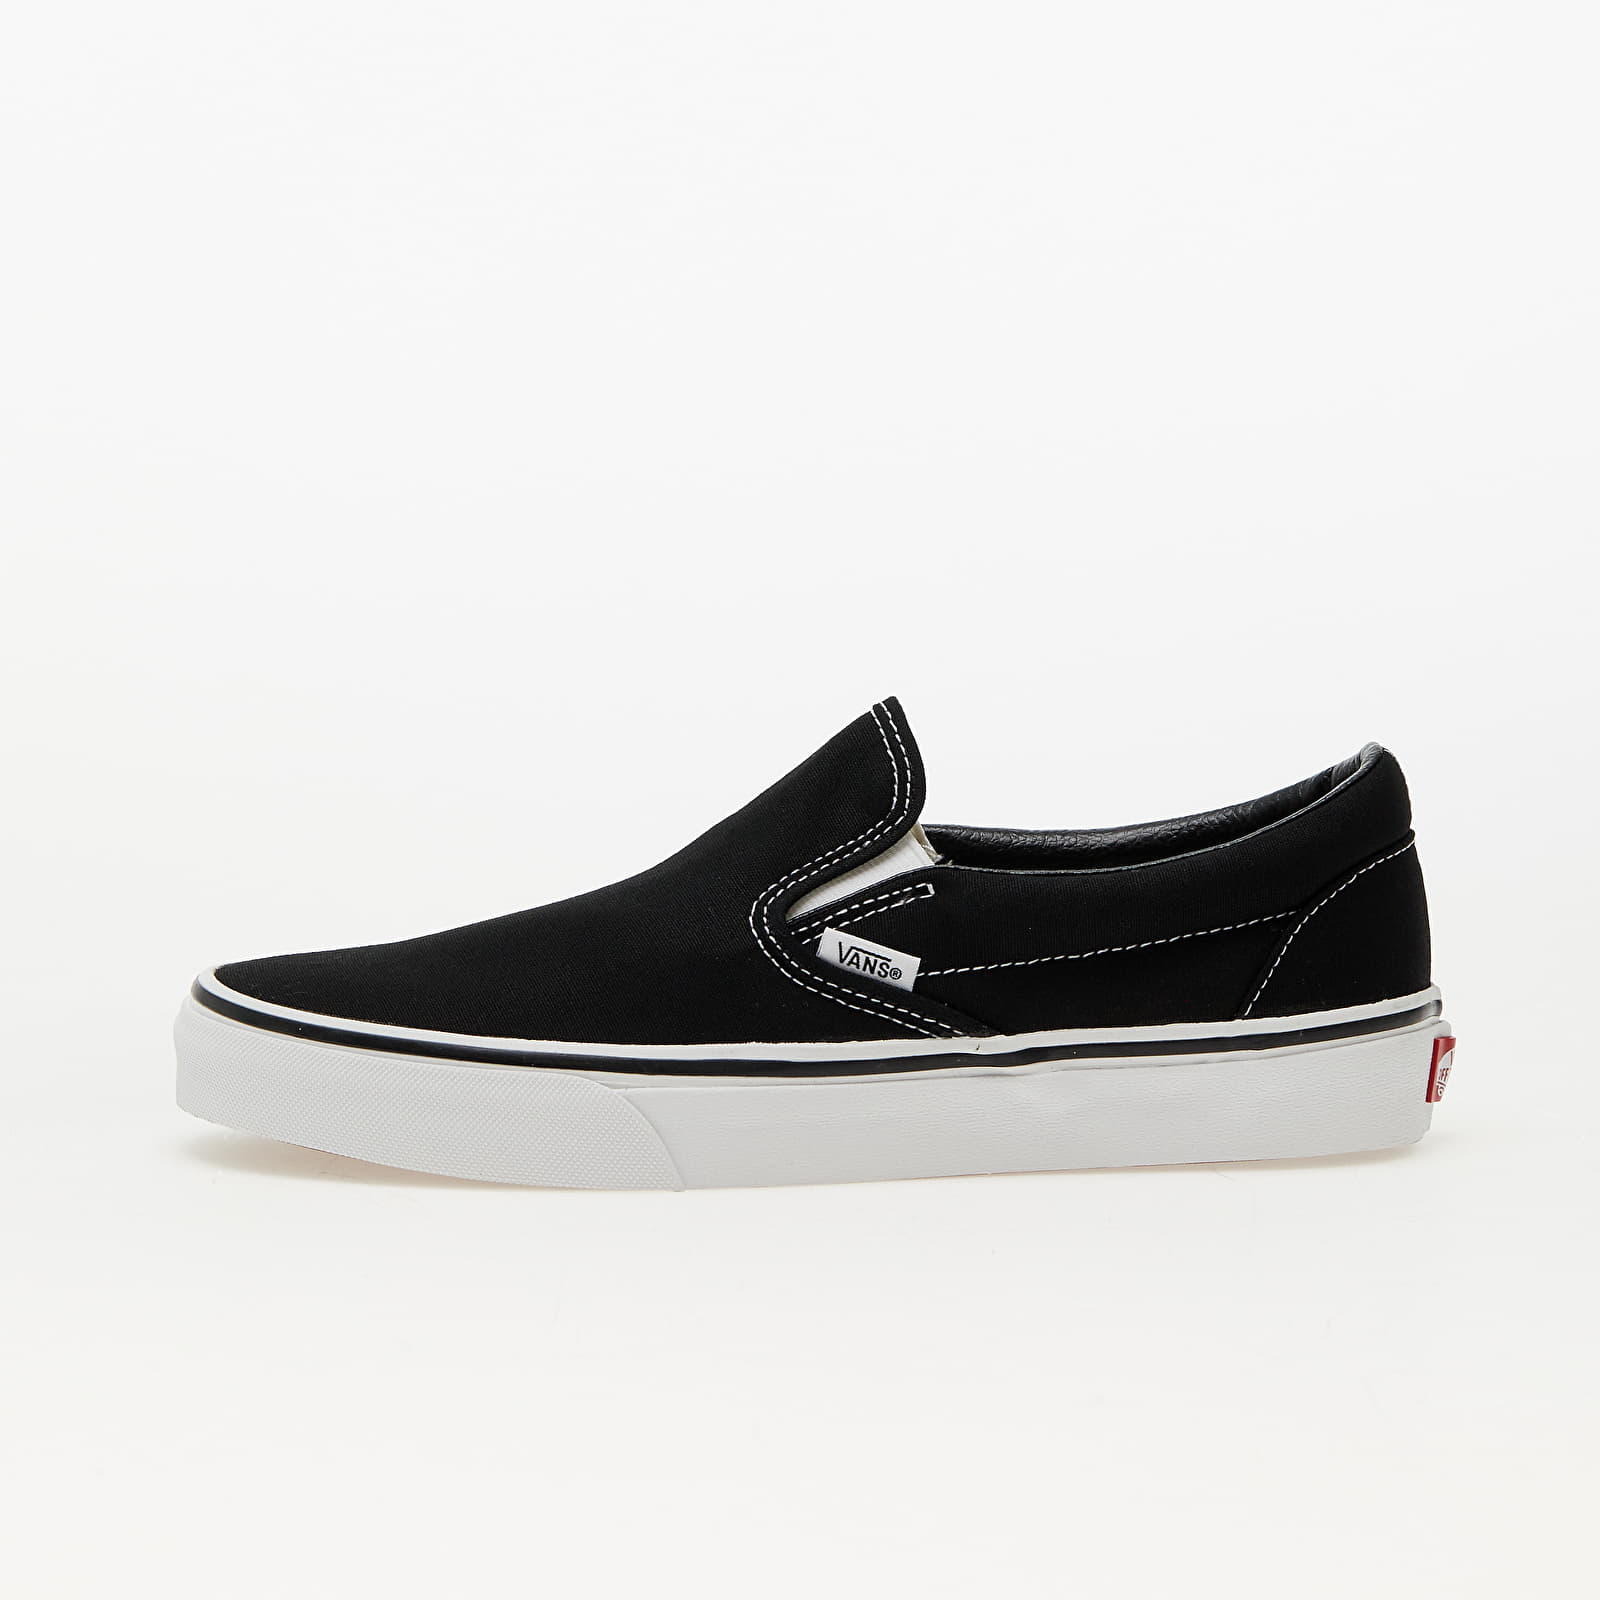 Men's shoes Vans Classic Slip-On Black